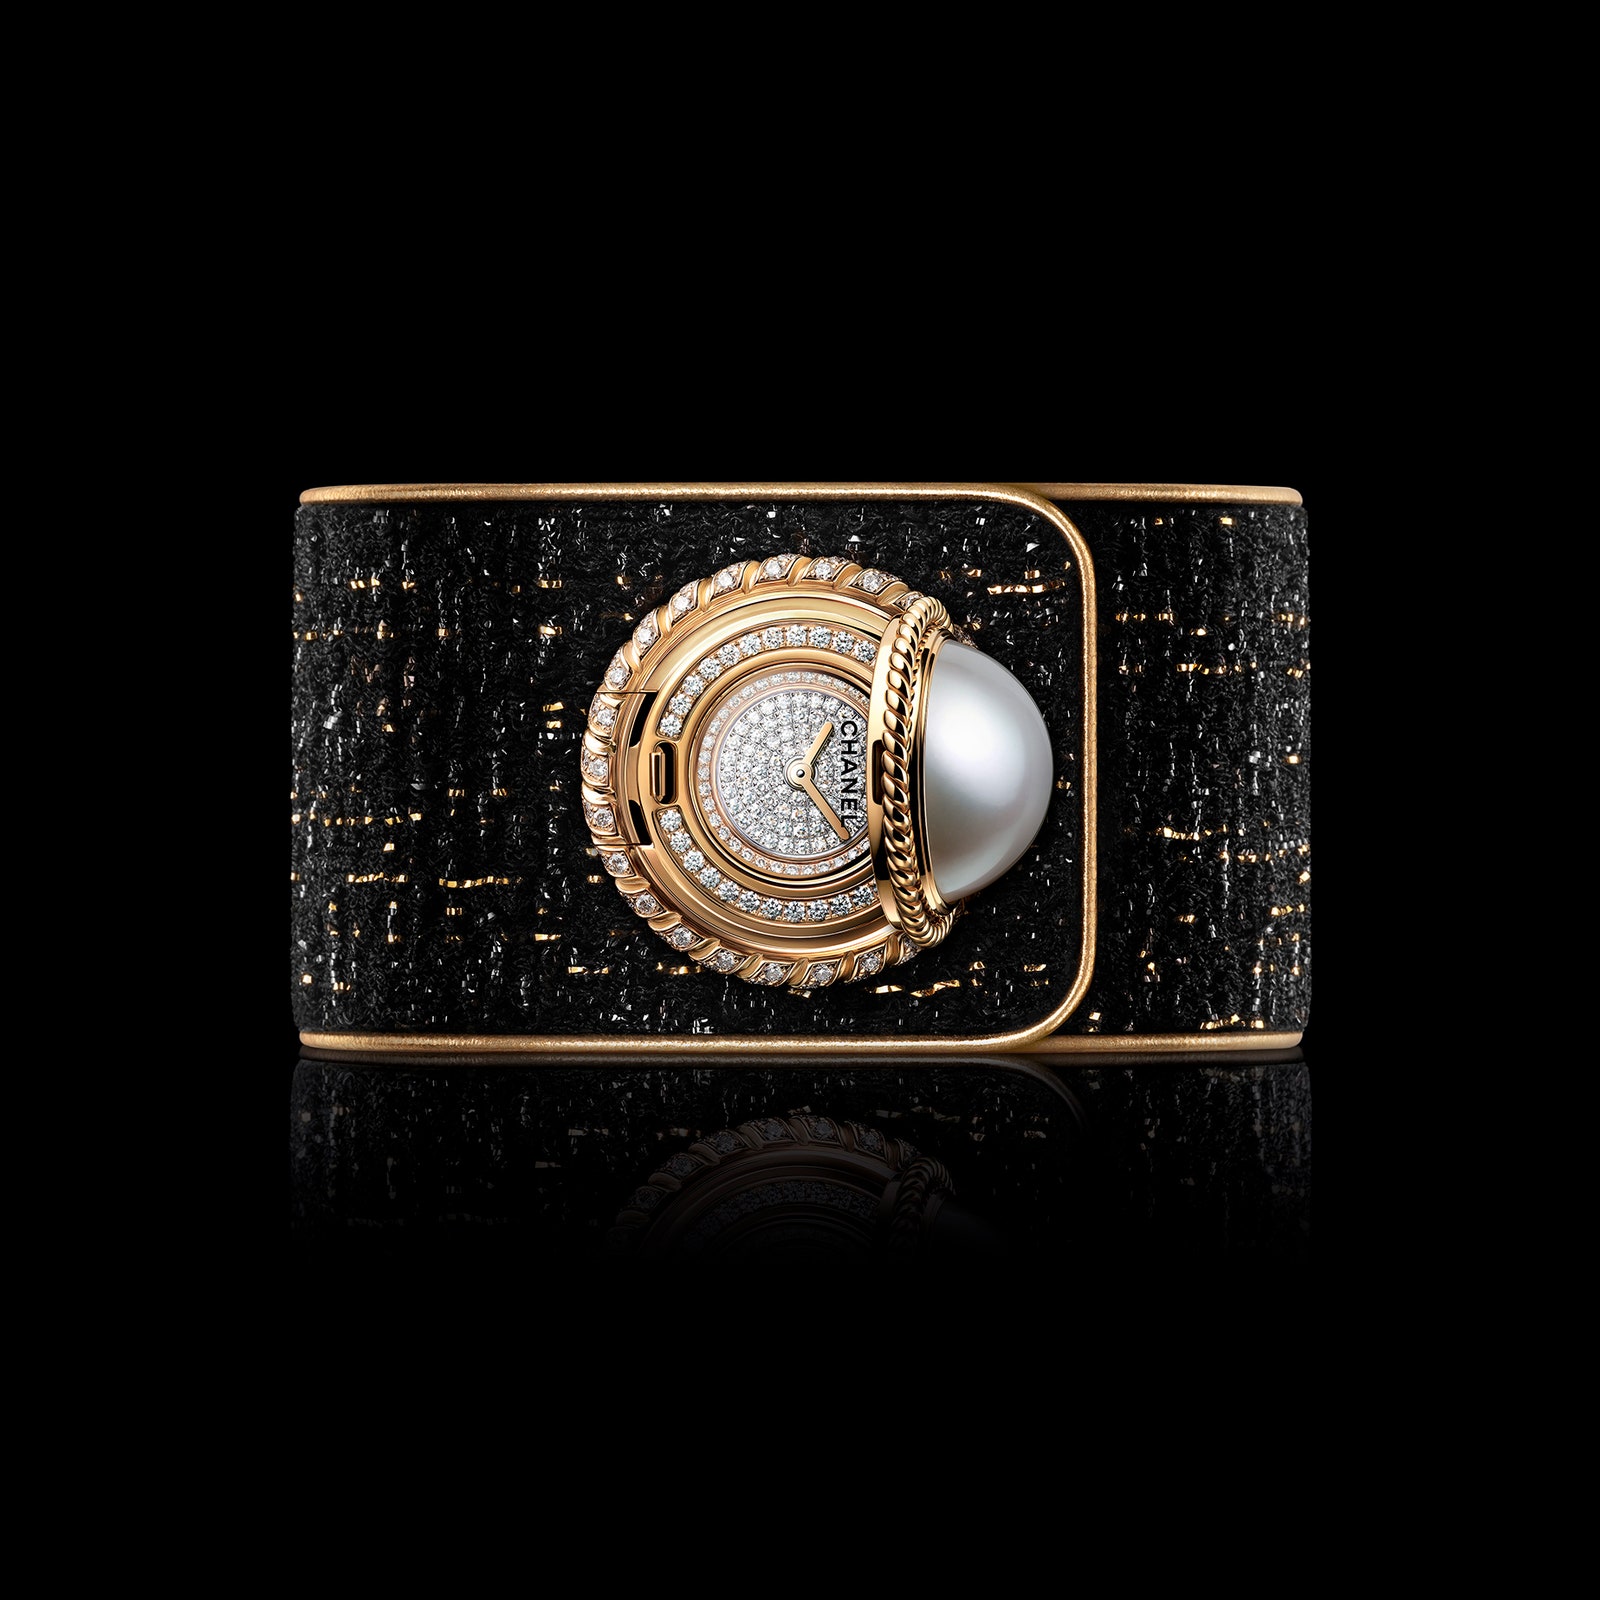 Chanel выпустили драгоценные часы-манжеты Mademoiselle Privé Bouton